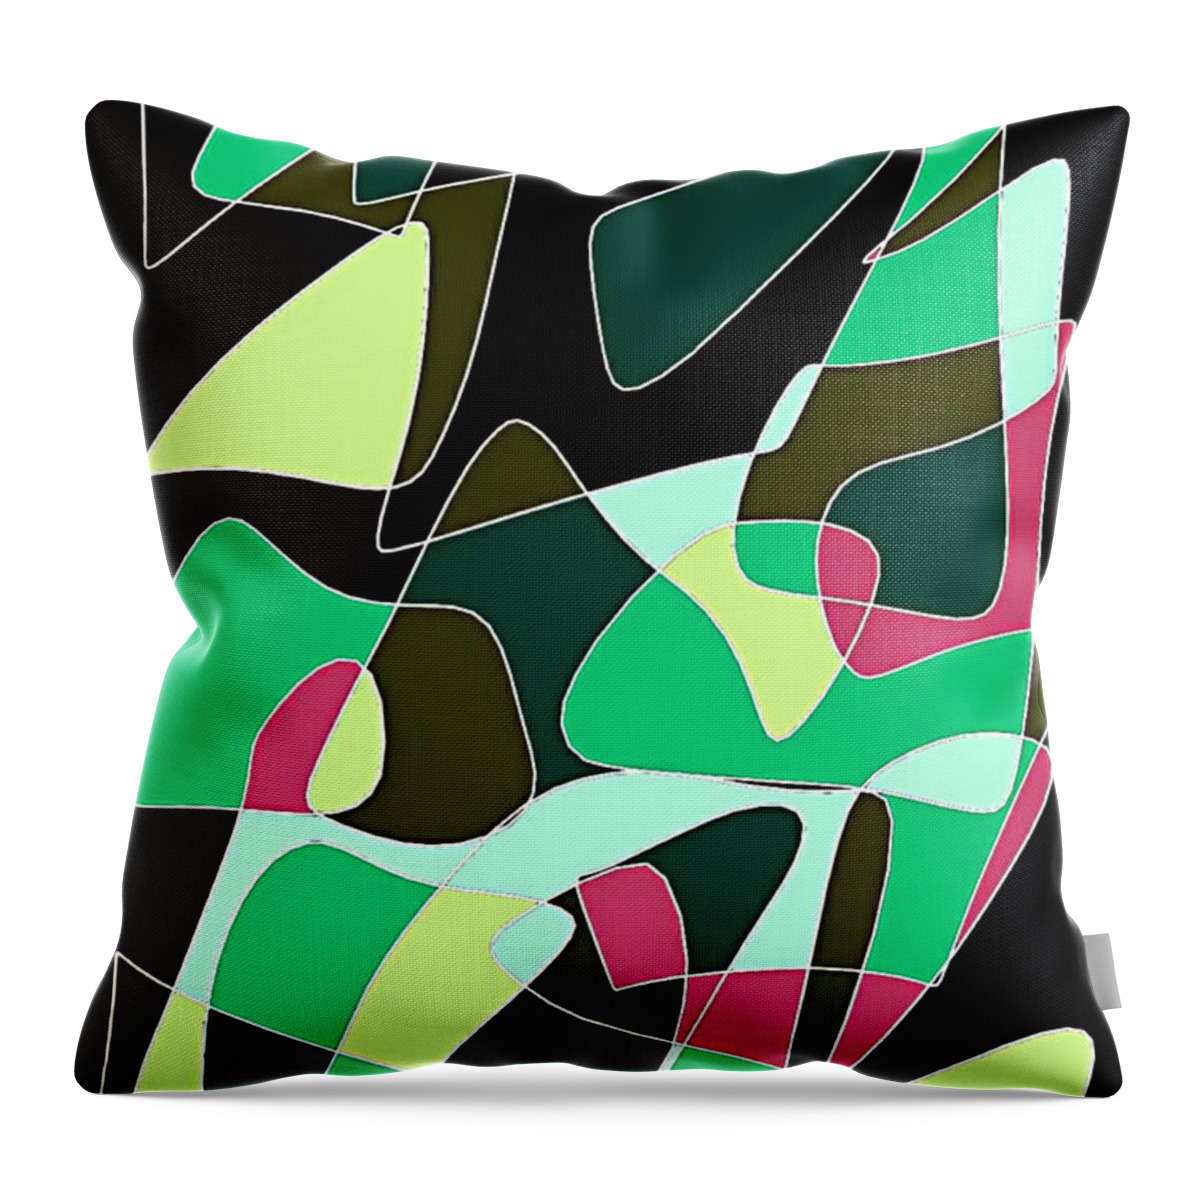 Abstrakt Throw Pillow featuring the digital art Abstract art in green by Nomi Morina